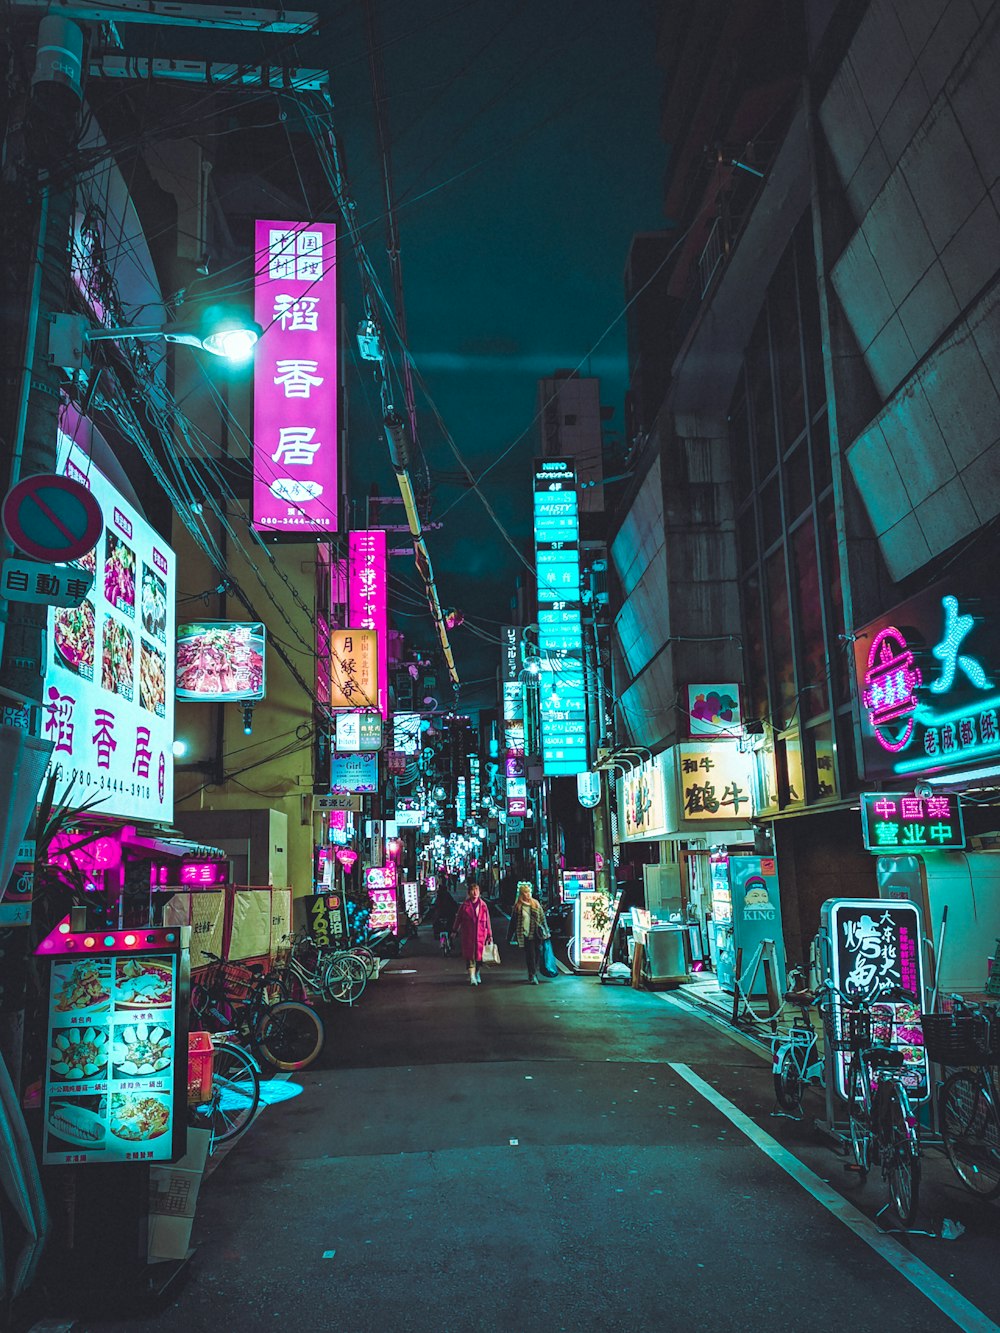 People walking on street during night time photo – Free Neon Image on ...